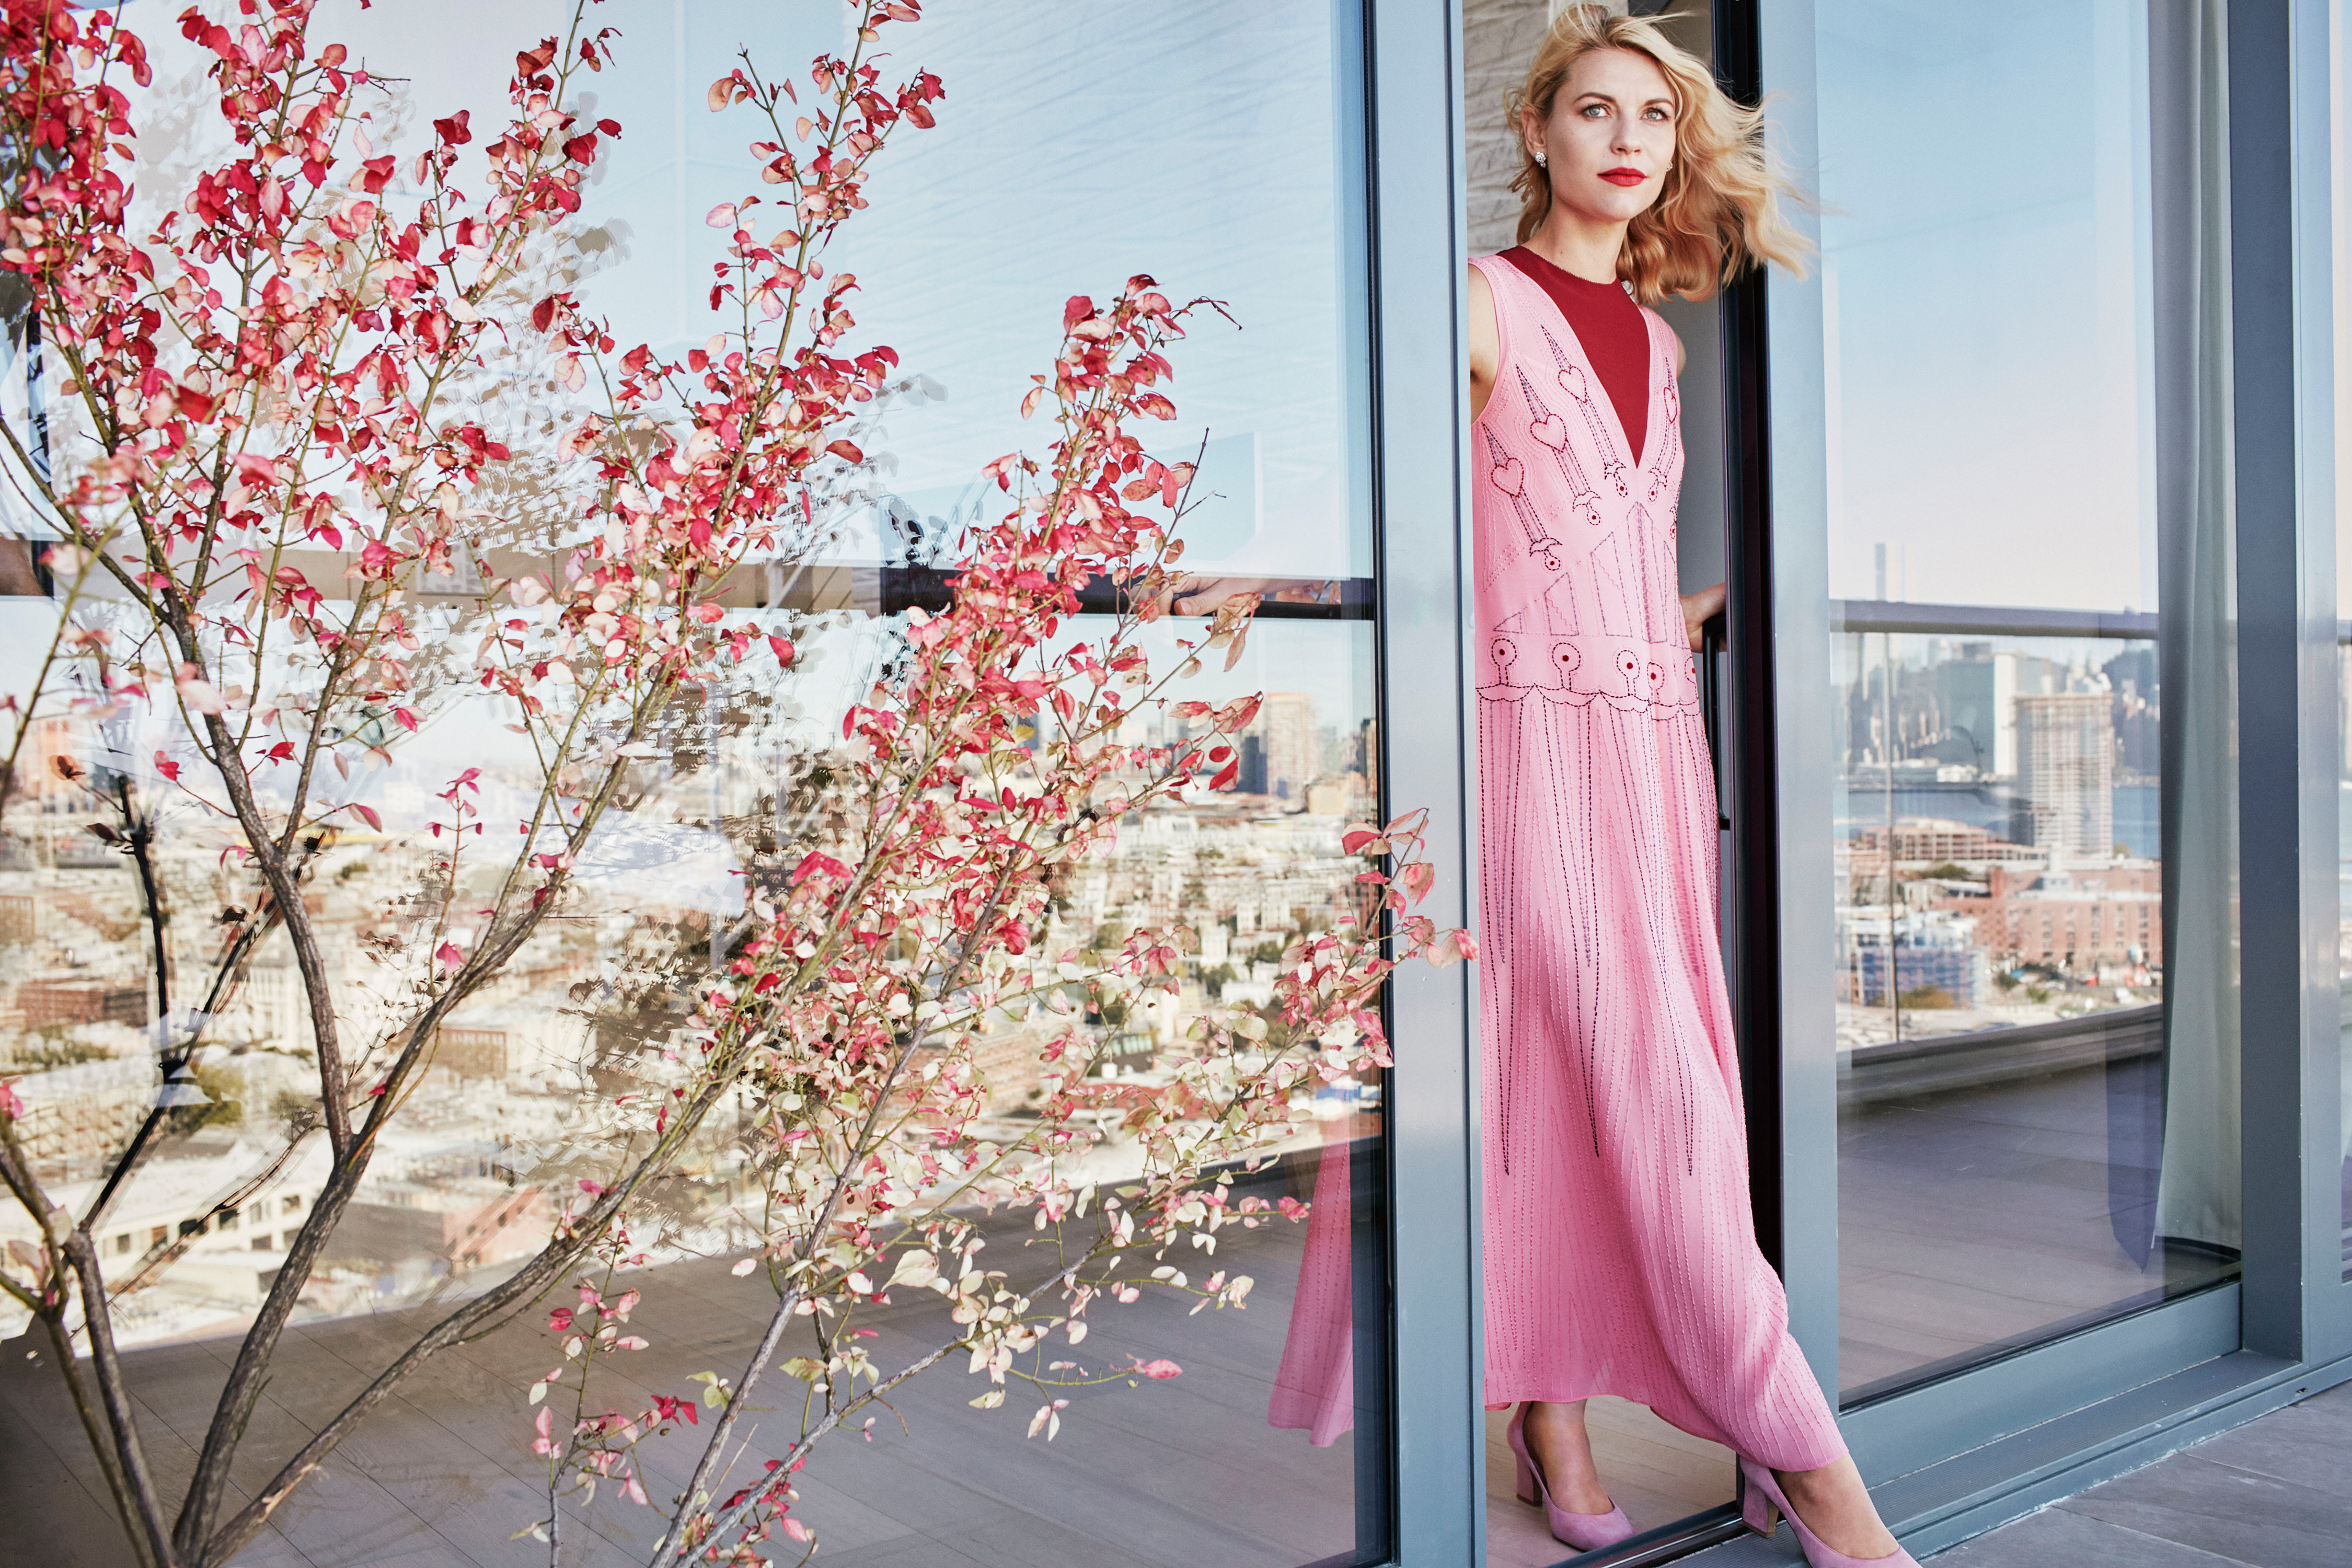 Actress Blonde Blue Eyes Claire Danes Lipstick Pink Dress 4500x3000